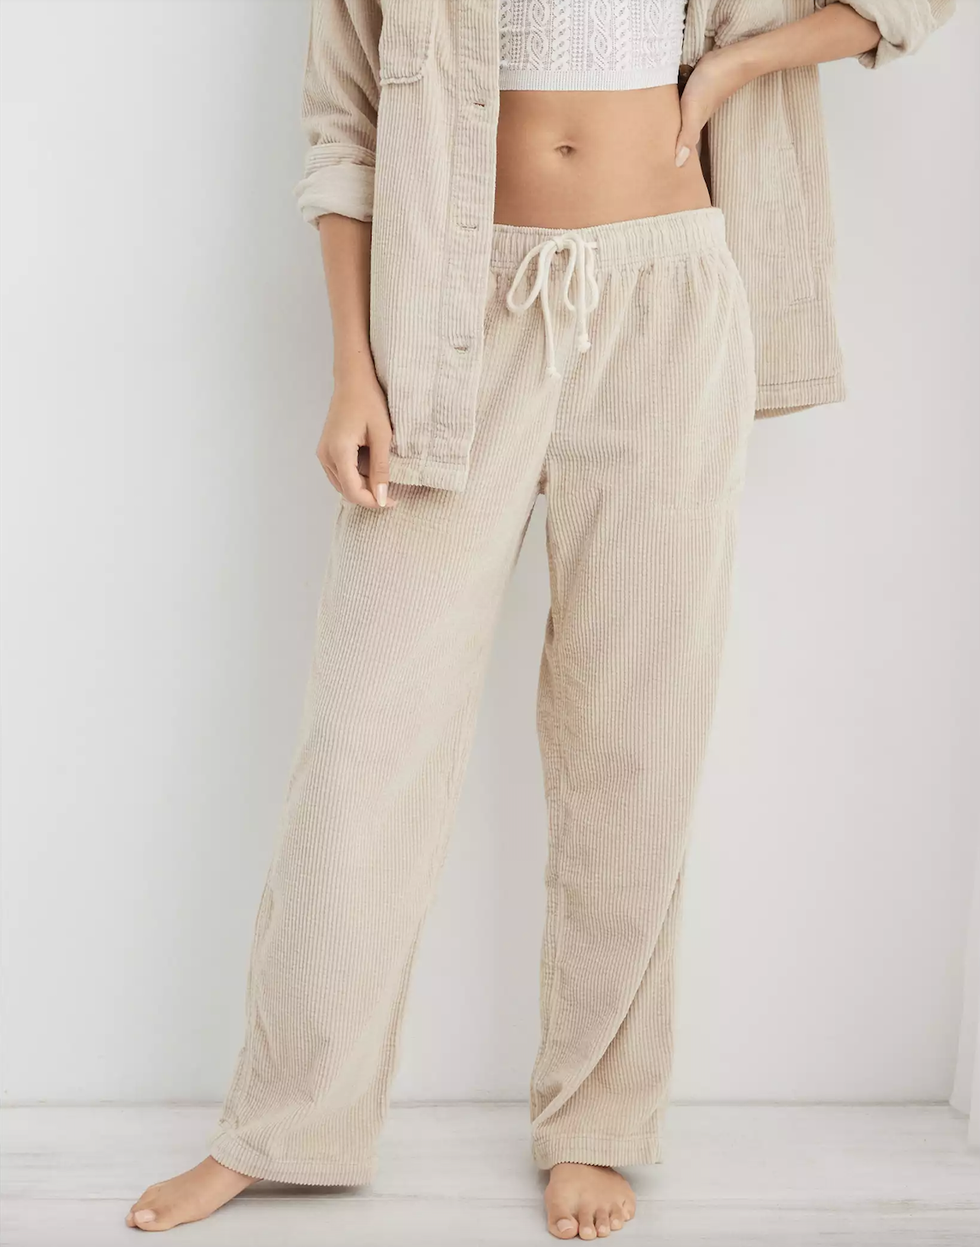 Women's White Cotton Beach Pants & Wide Leg Lounge Pants – Elle and Willow